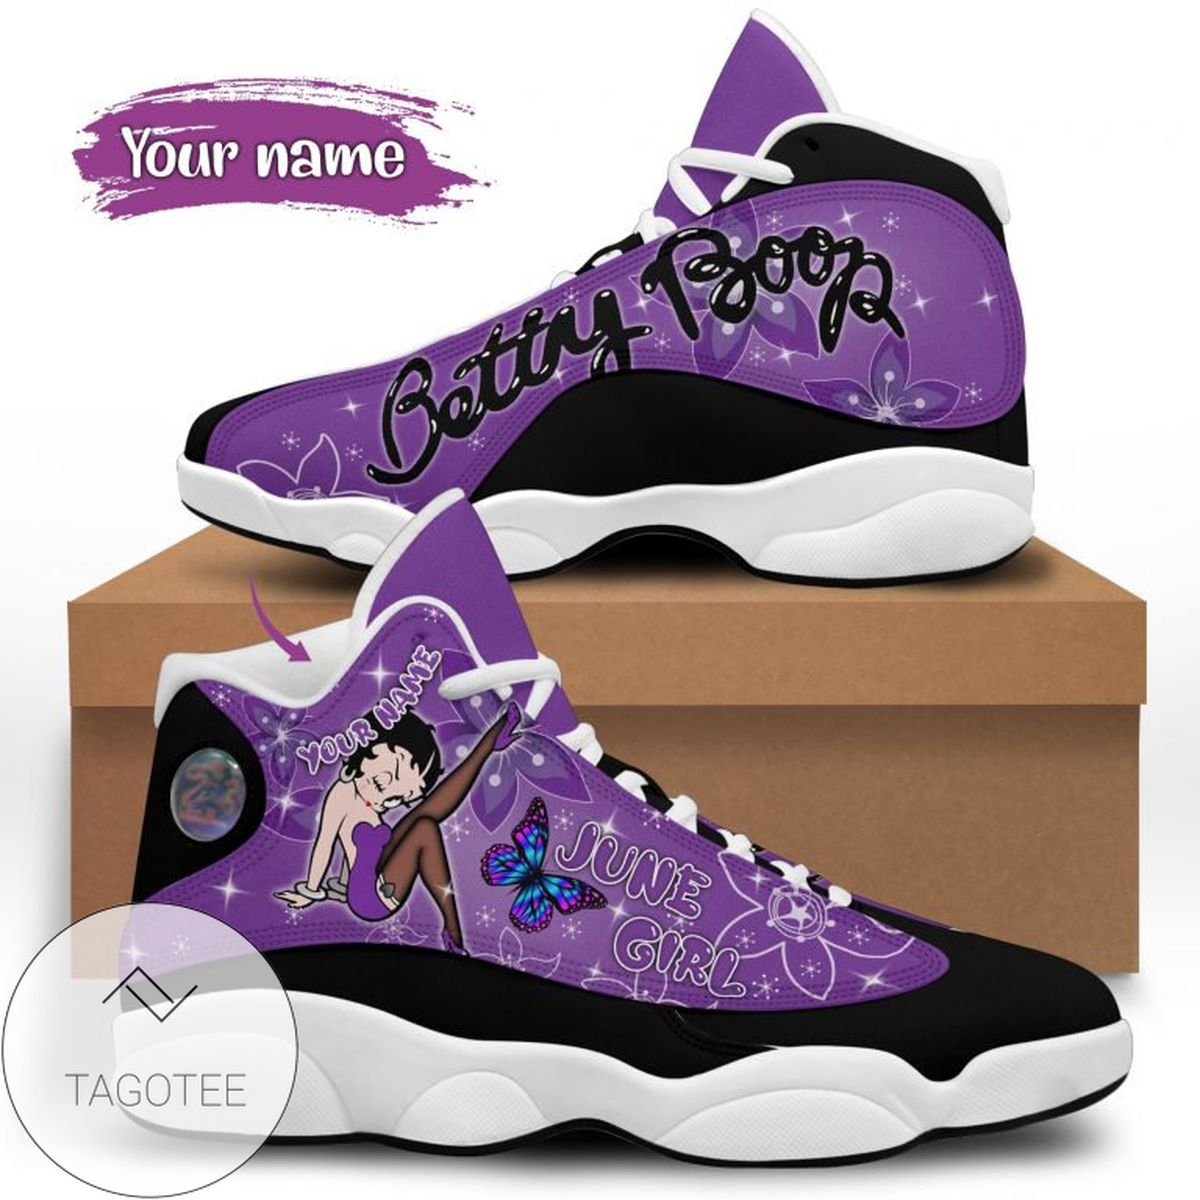 Betty Boop Cartoon Network Air Jordan 13 Shoes Sneakers